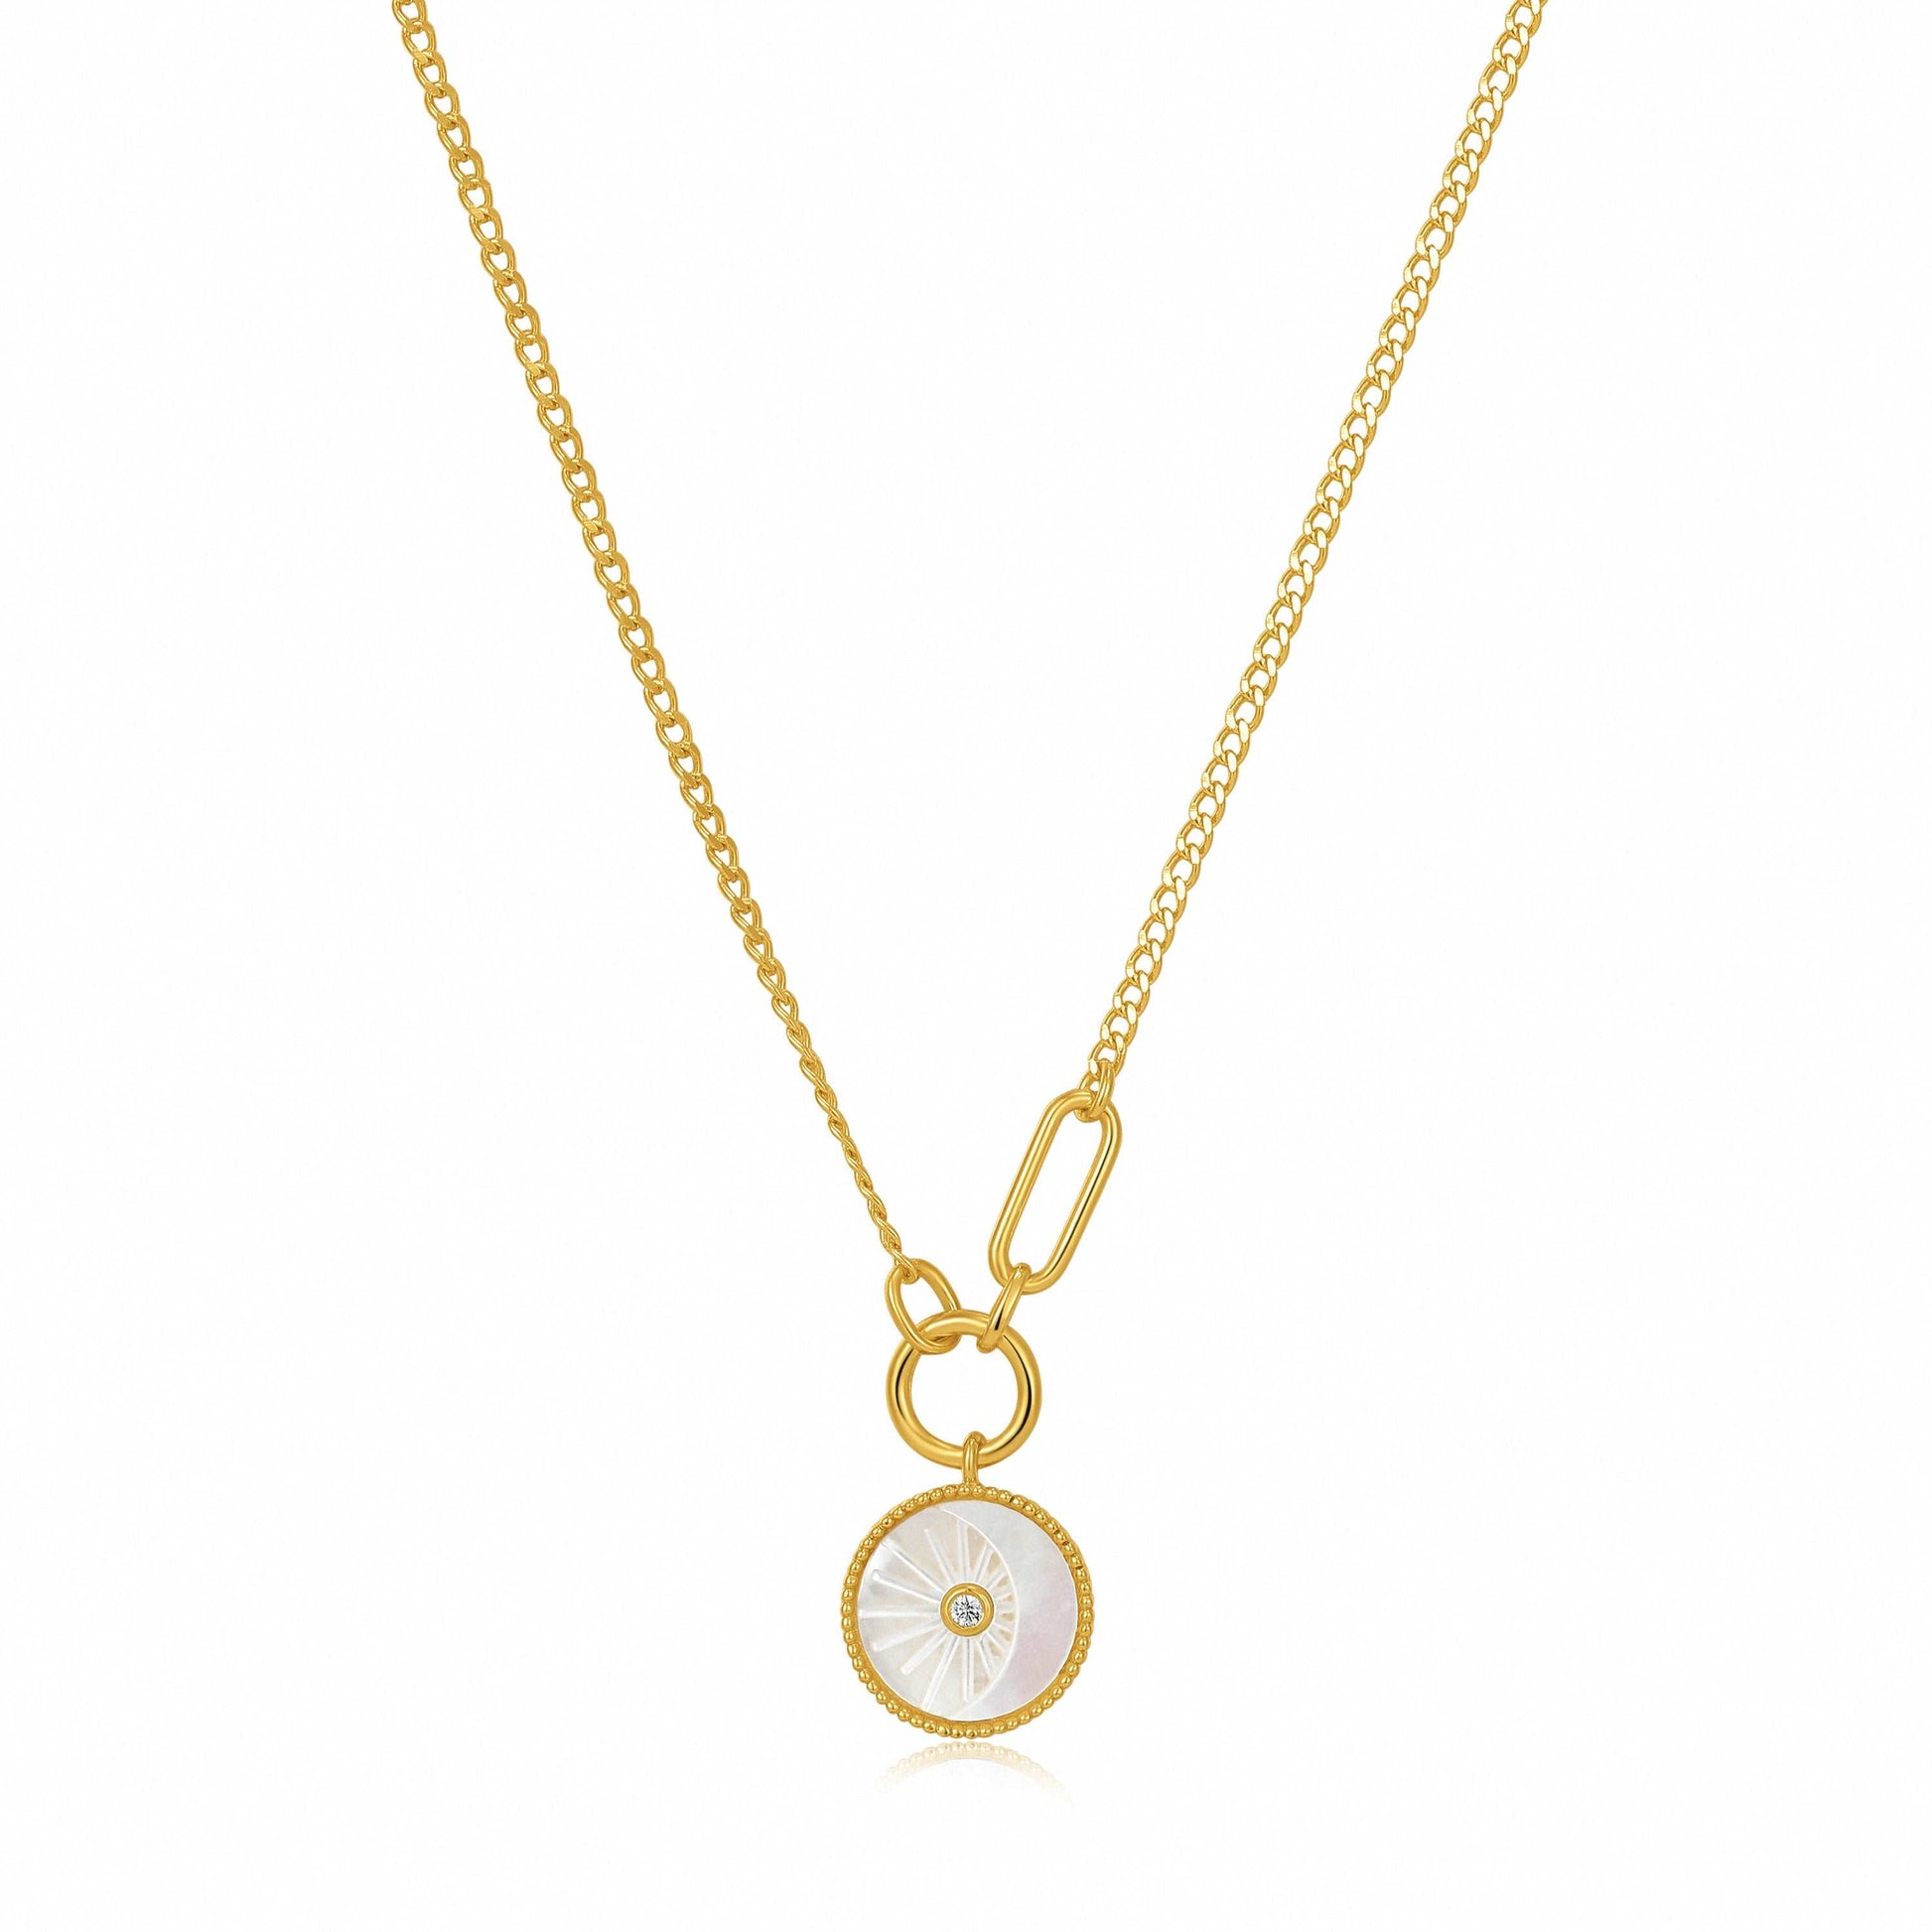 Ania Haie Eclipse Emblem Necklace - Silver Necklace